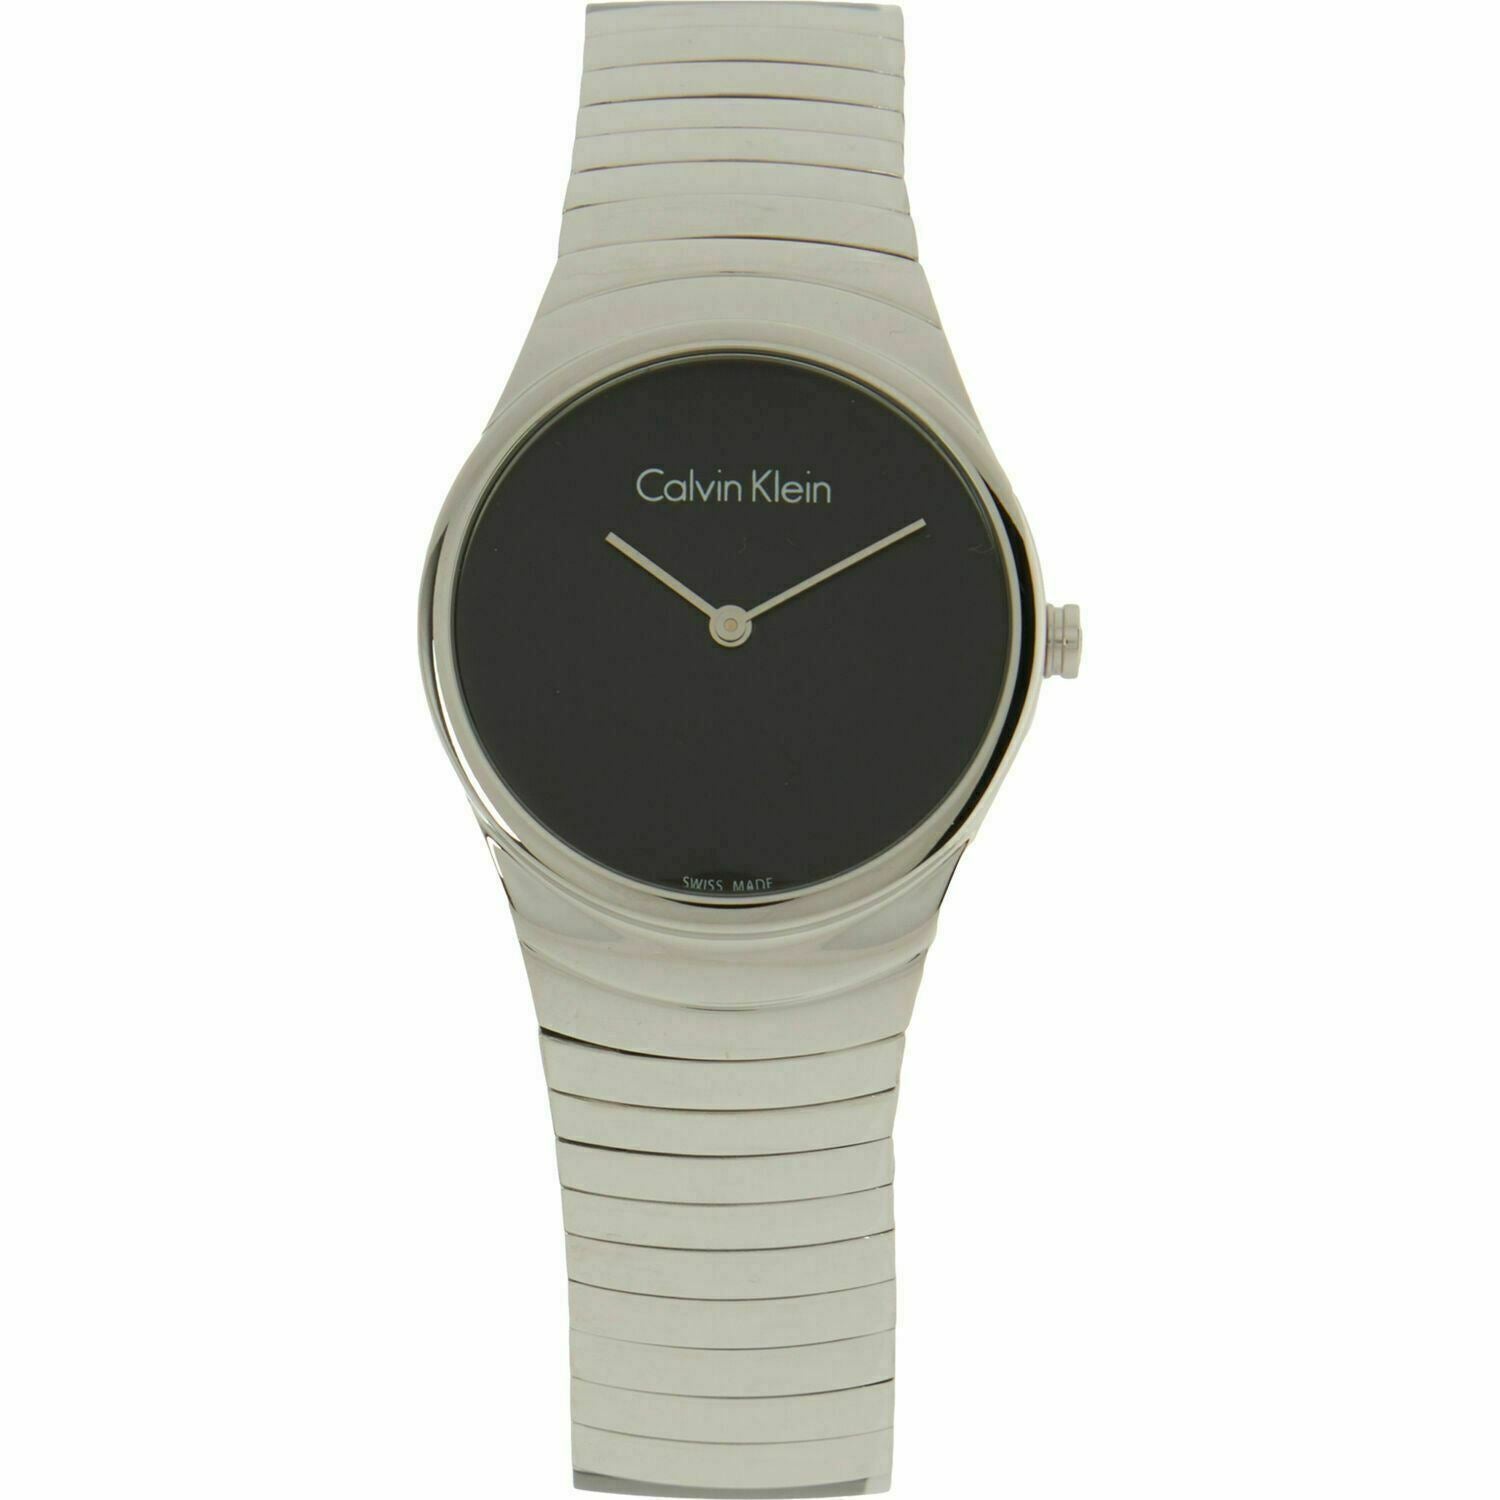 CALVIN KLEIN Women's Whirl Watch, Stainless Steel Strap K8A23141